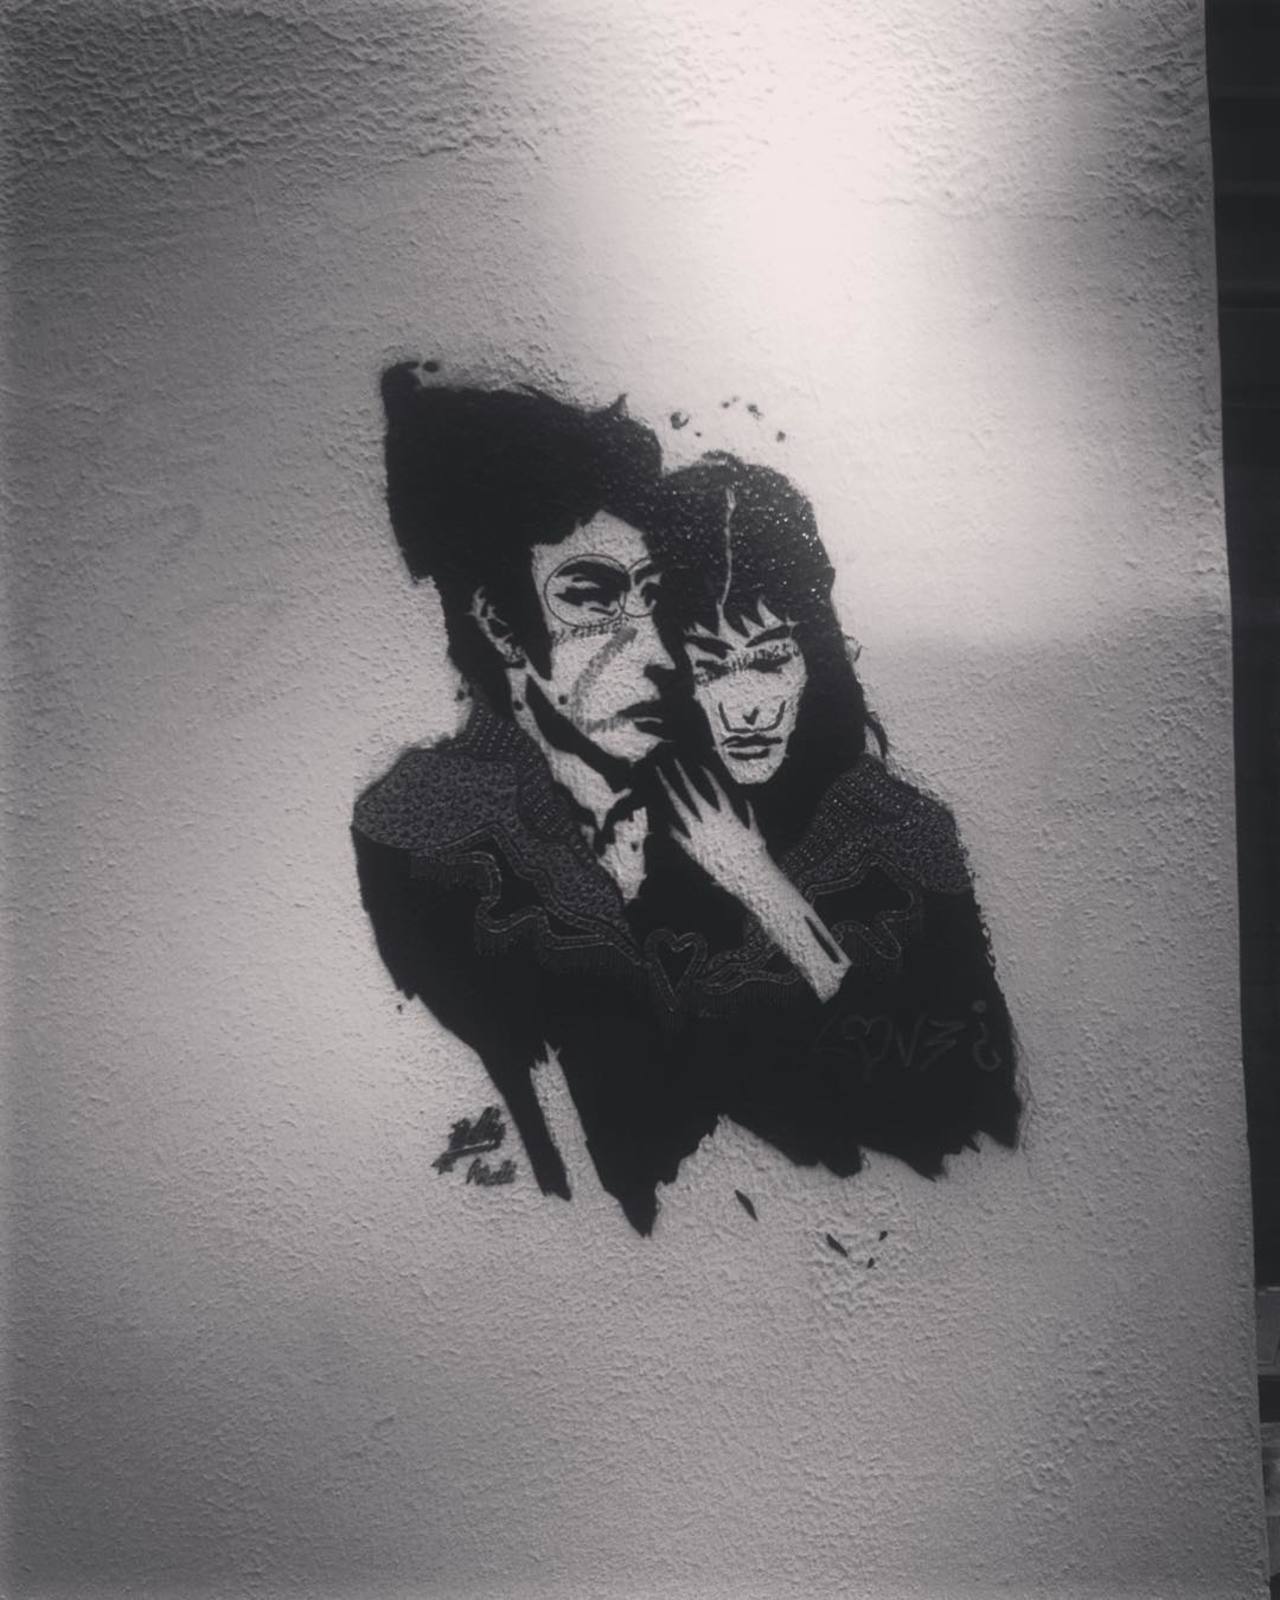 #Paris #graffiti photo by @mh2p_ http://ift.tt/1kJORCh #StreetArt https://t.co/LIuoMmcRSX